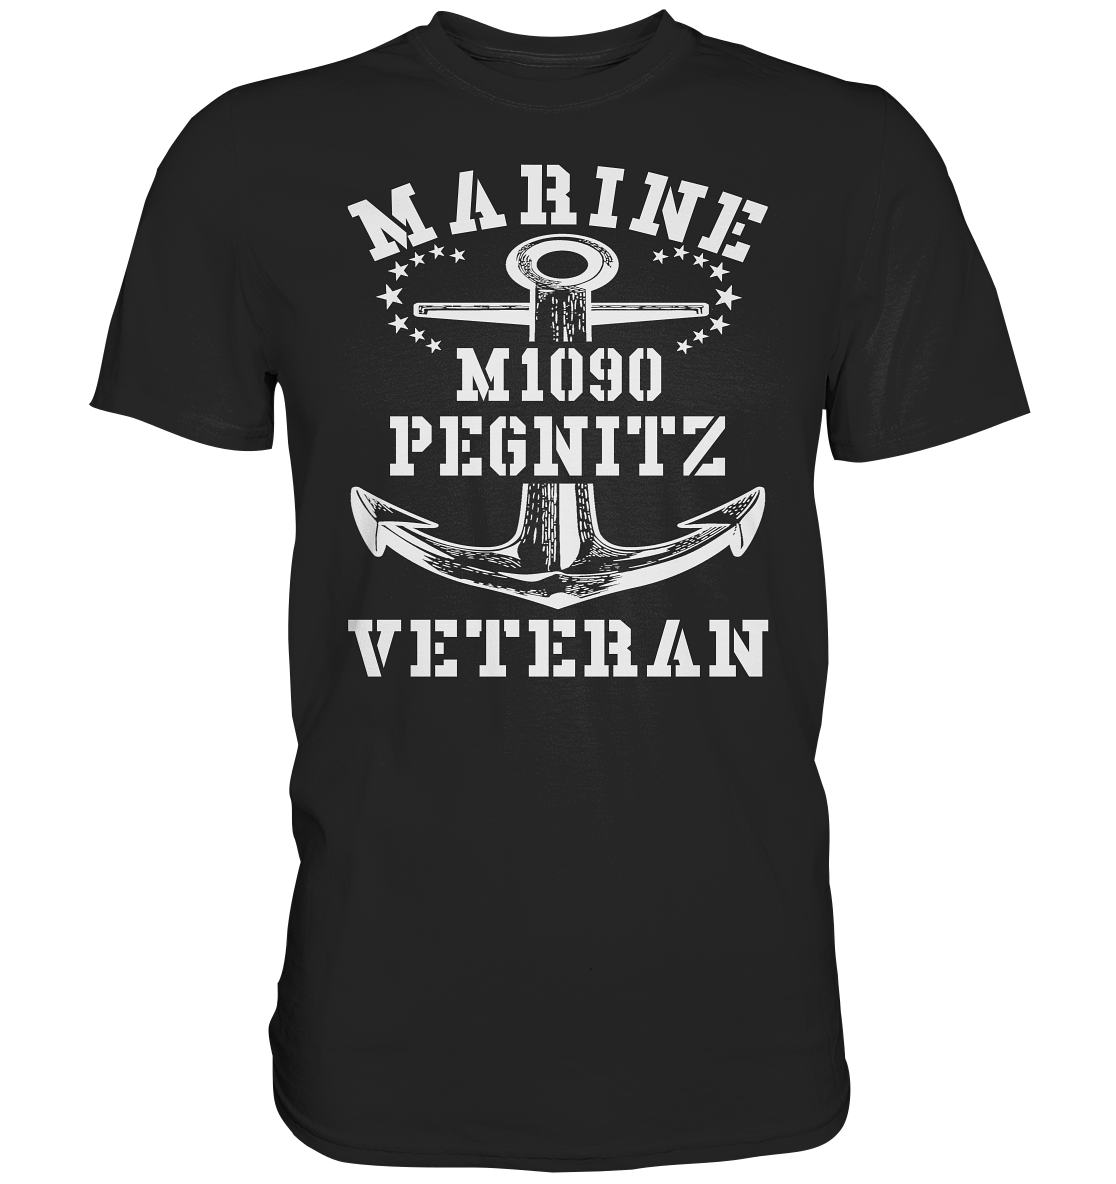 M1090 PEGNITZ Marine Veteran - Premium Shirt